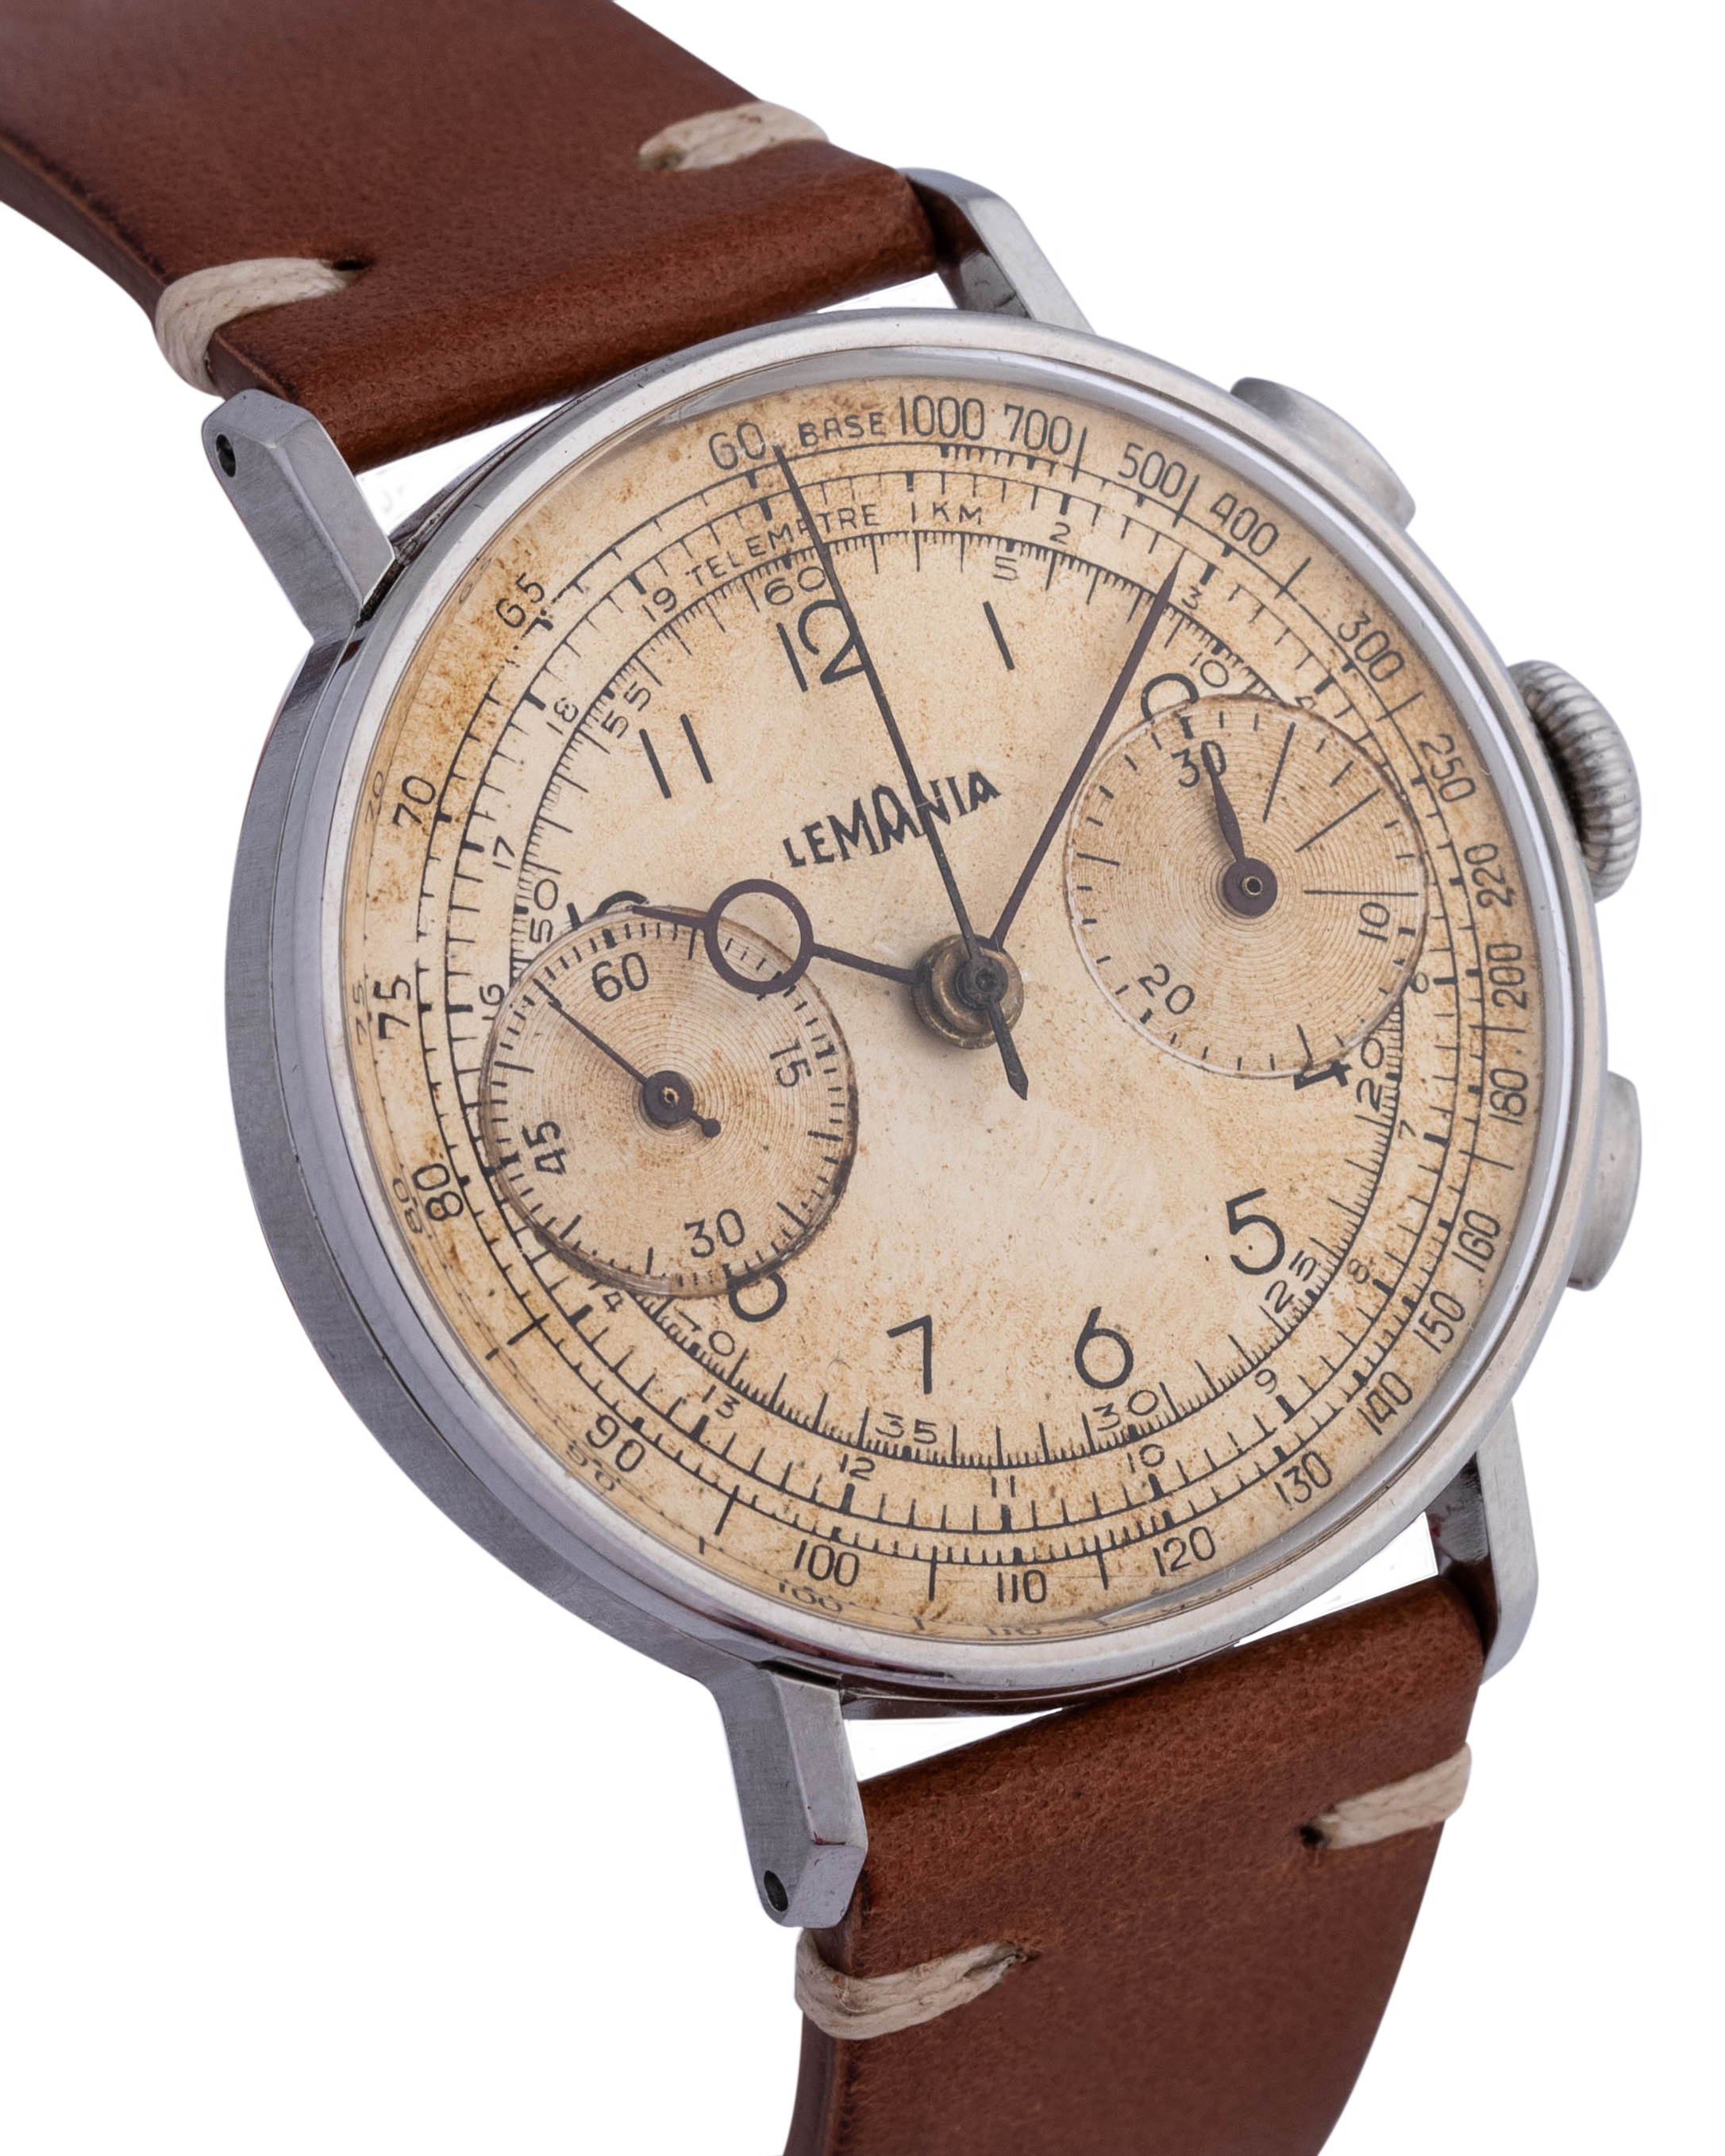 Lemania Chronograph wrist watch